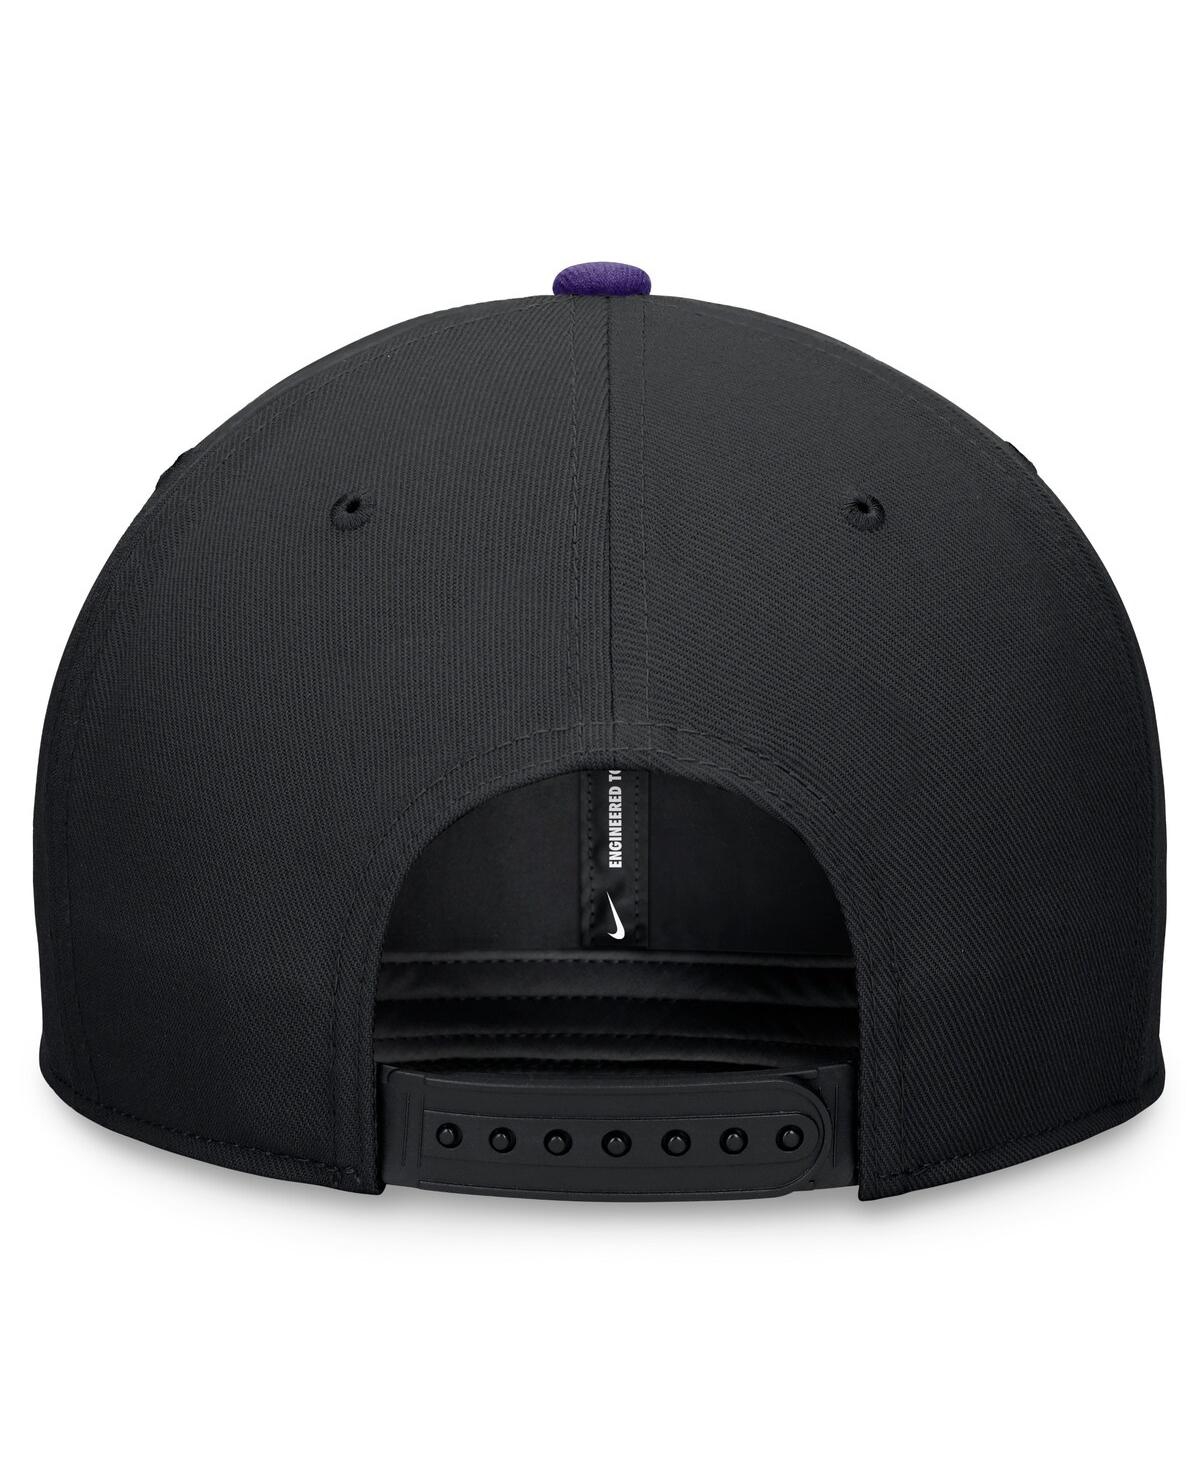 Shop Nike Men's Black/purple Colorado Rockies Evergreen Two-tone Snapback Hat In Blk,crtppl